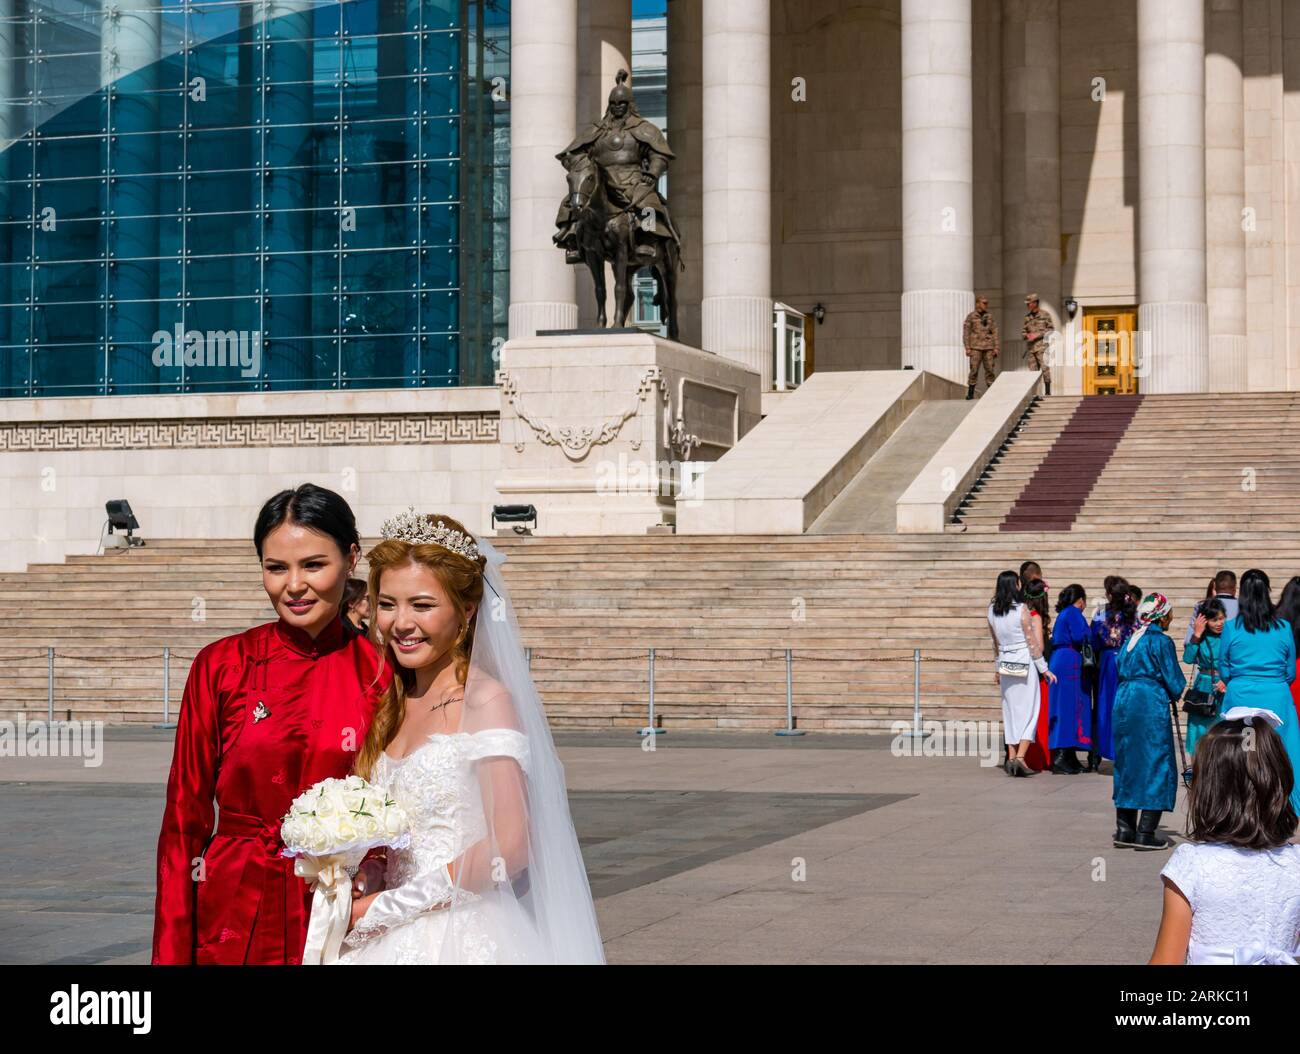 https://c8.alamy.com/comp/2ARKC11/wedding-party-celebrating-with-bride-skhbaatar-square-ulaanbaatar-mongolia-2ARKC11.jpg